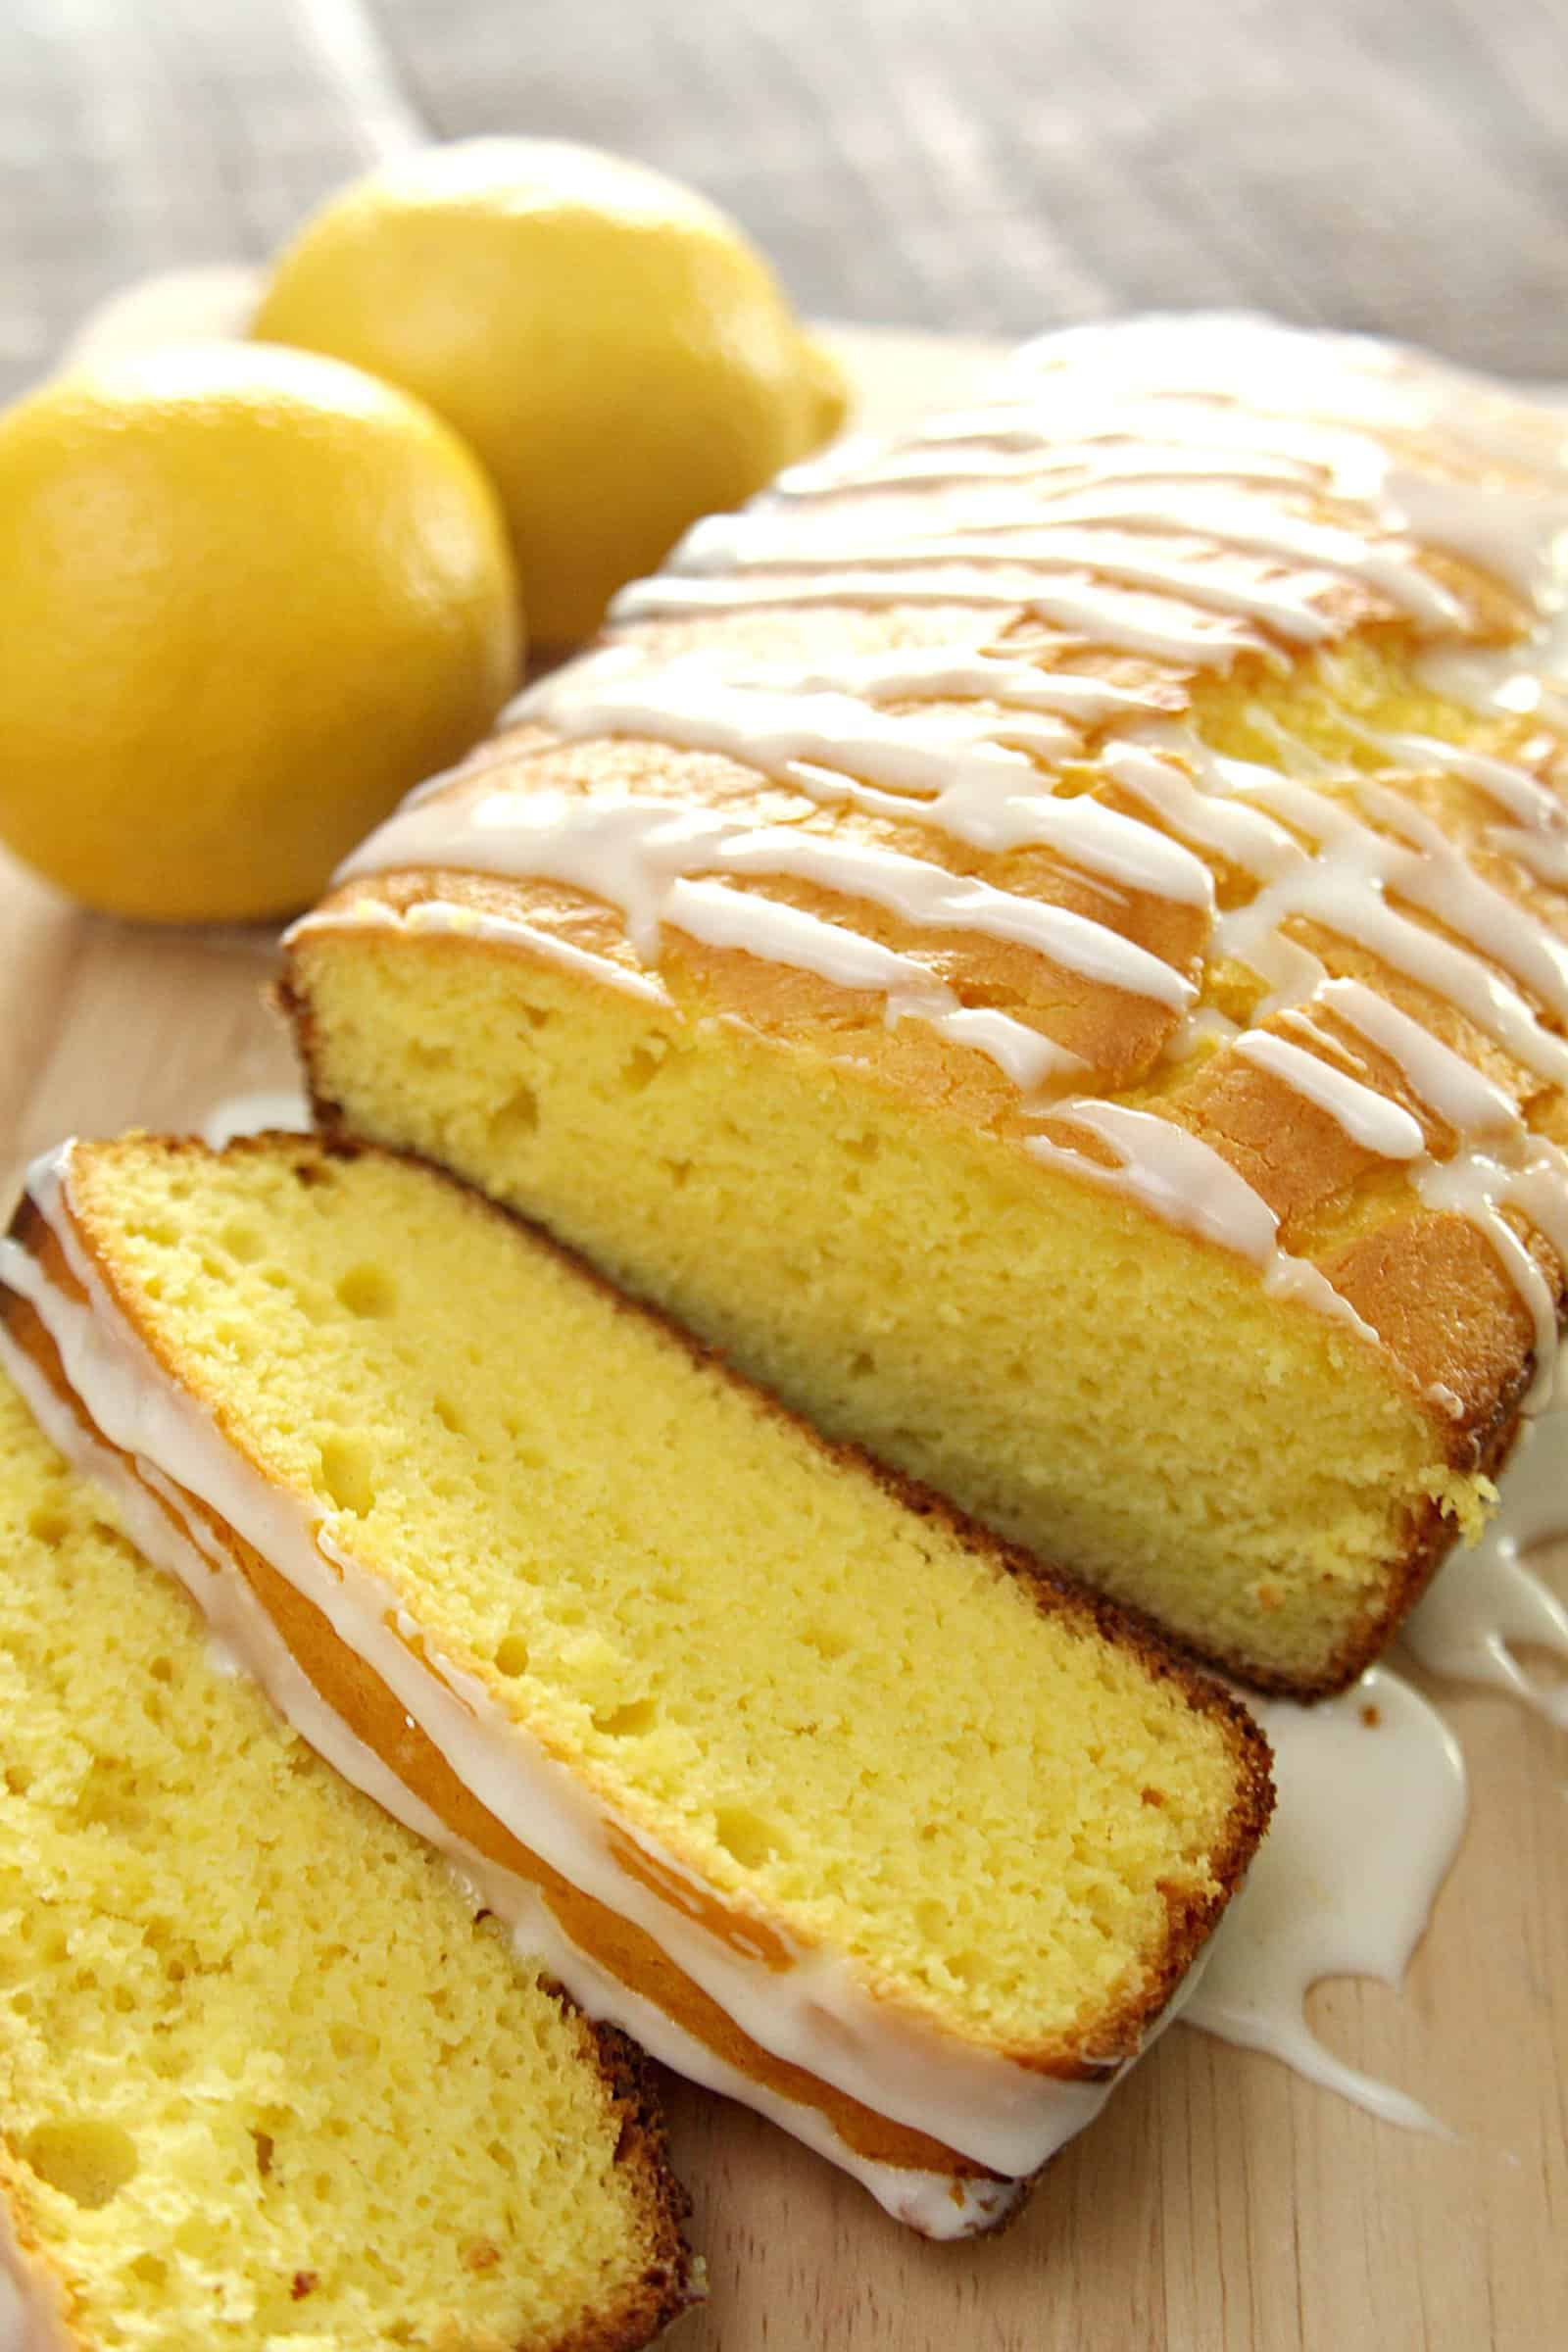 Duncan Hines Lemon Supreme Cake Mix | Hy-Vee Aisles Online Grocery Shopping